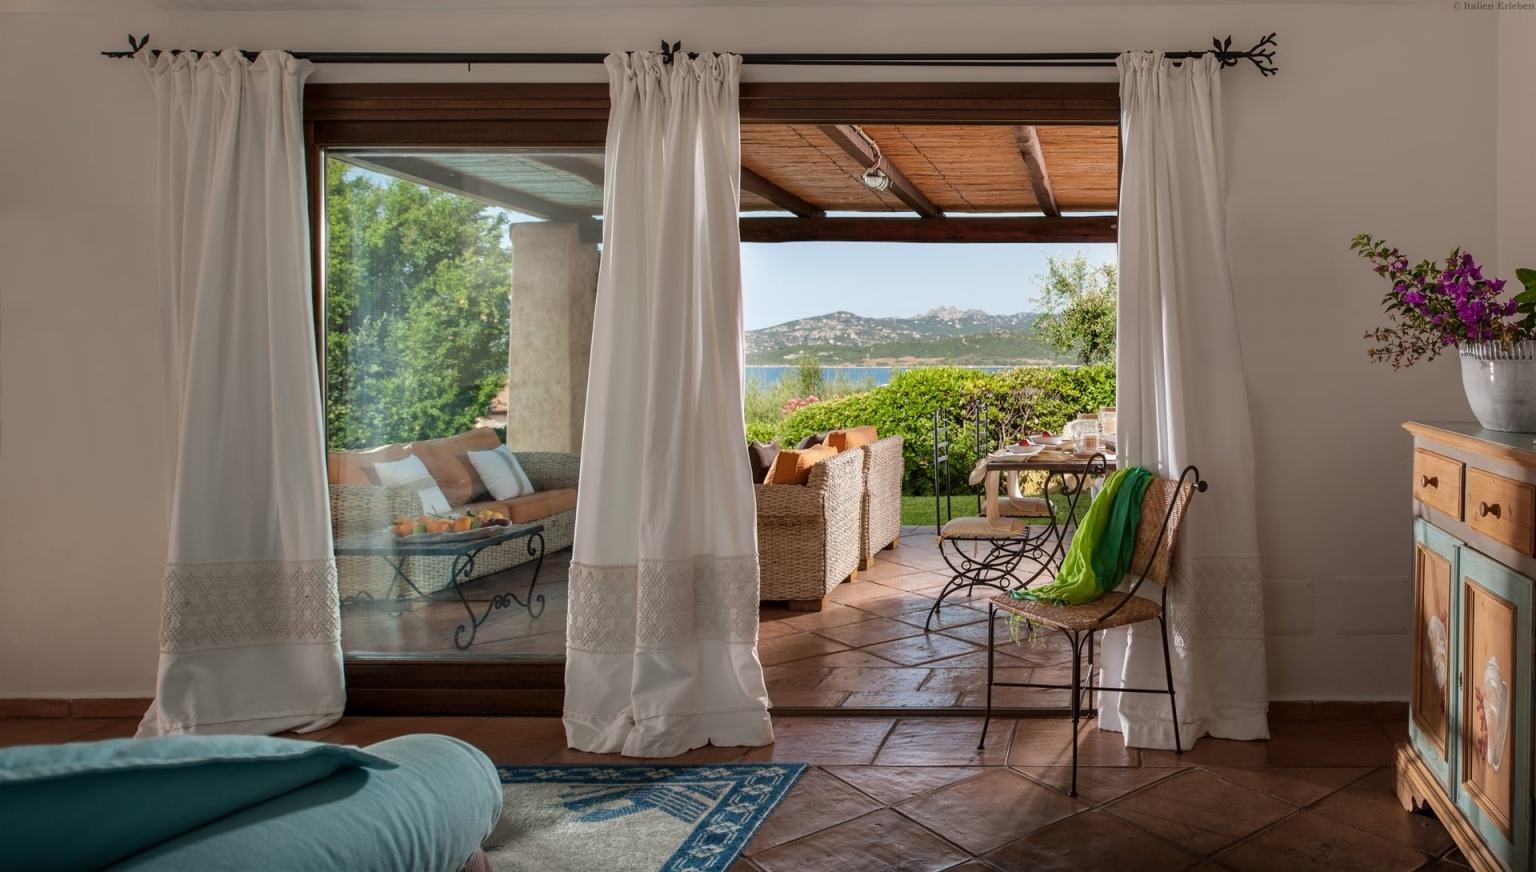 Sardinien Villa del Golfo Lifestyle Resort Cannigione Hotel Bucht Nord Meer Meerblick Panorama